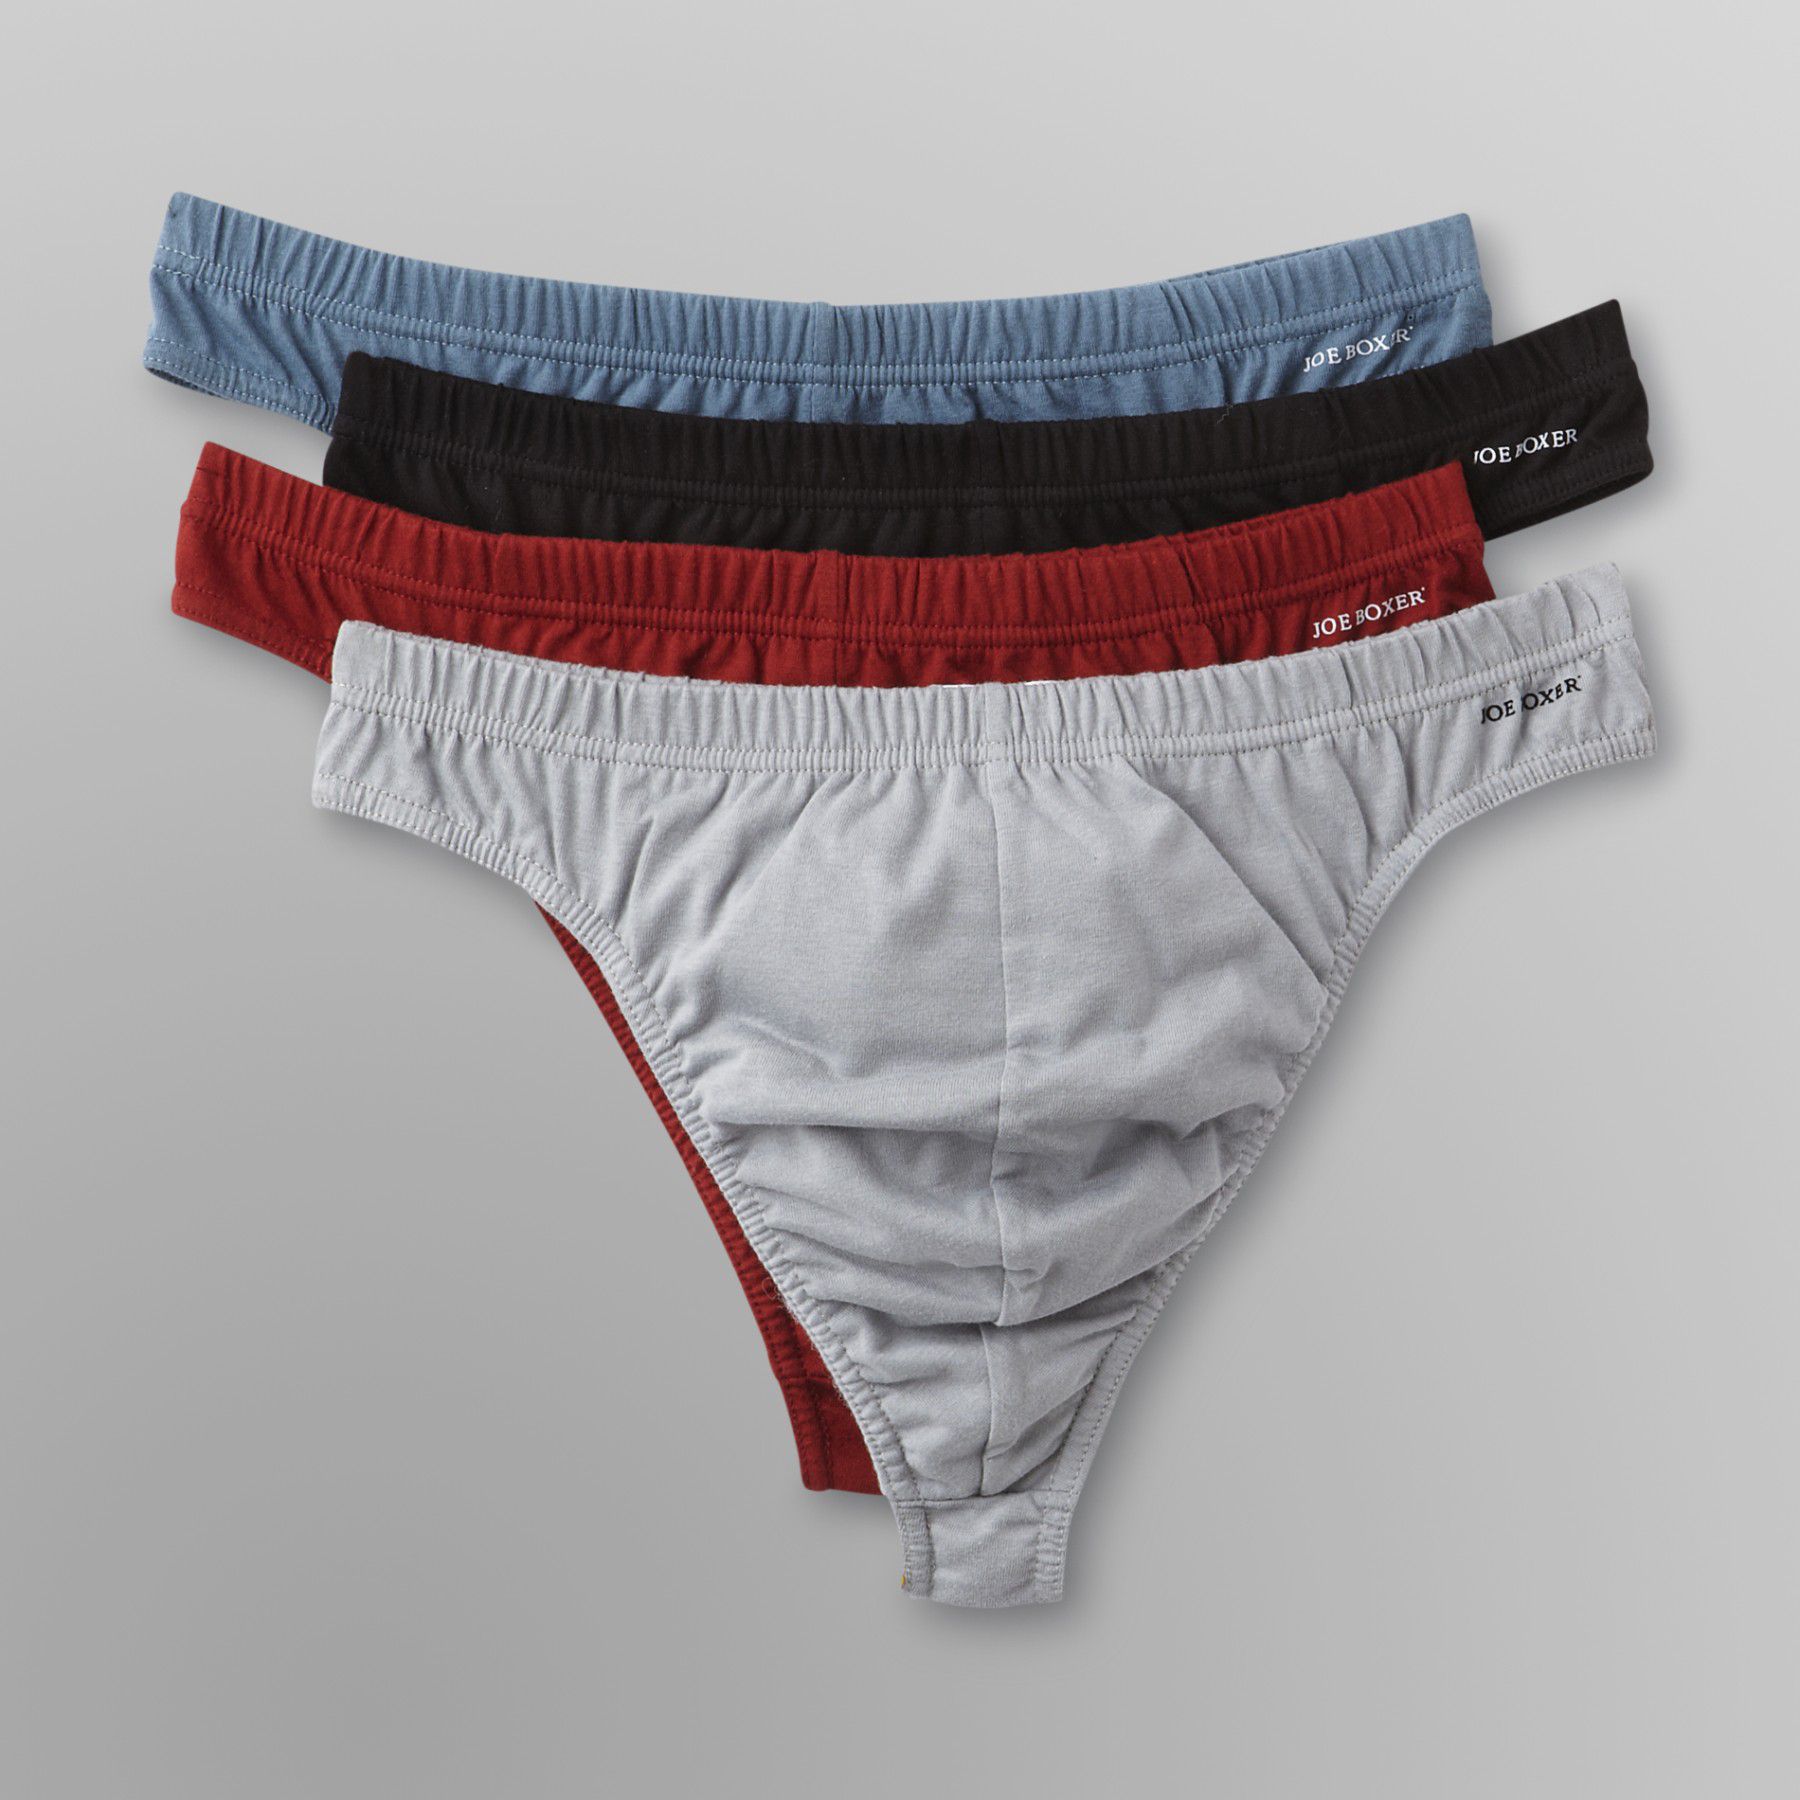 Joe Boxer Men's Thong Underwear - 4 Pack